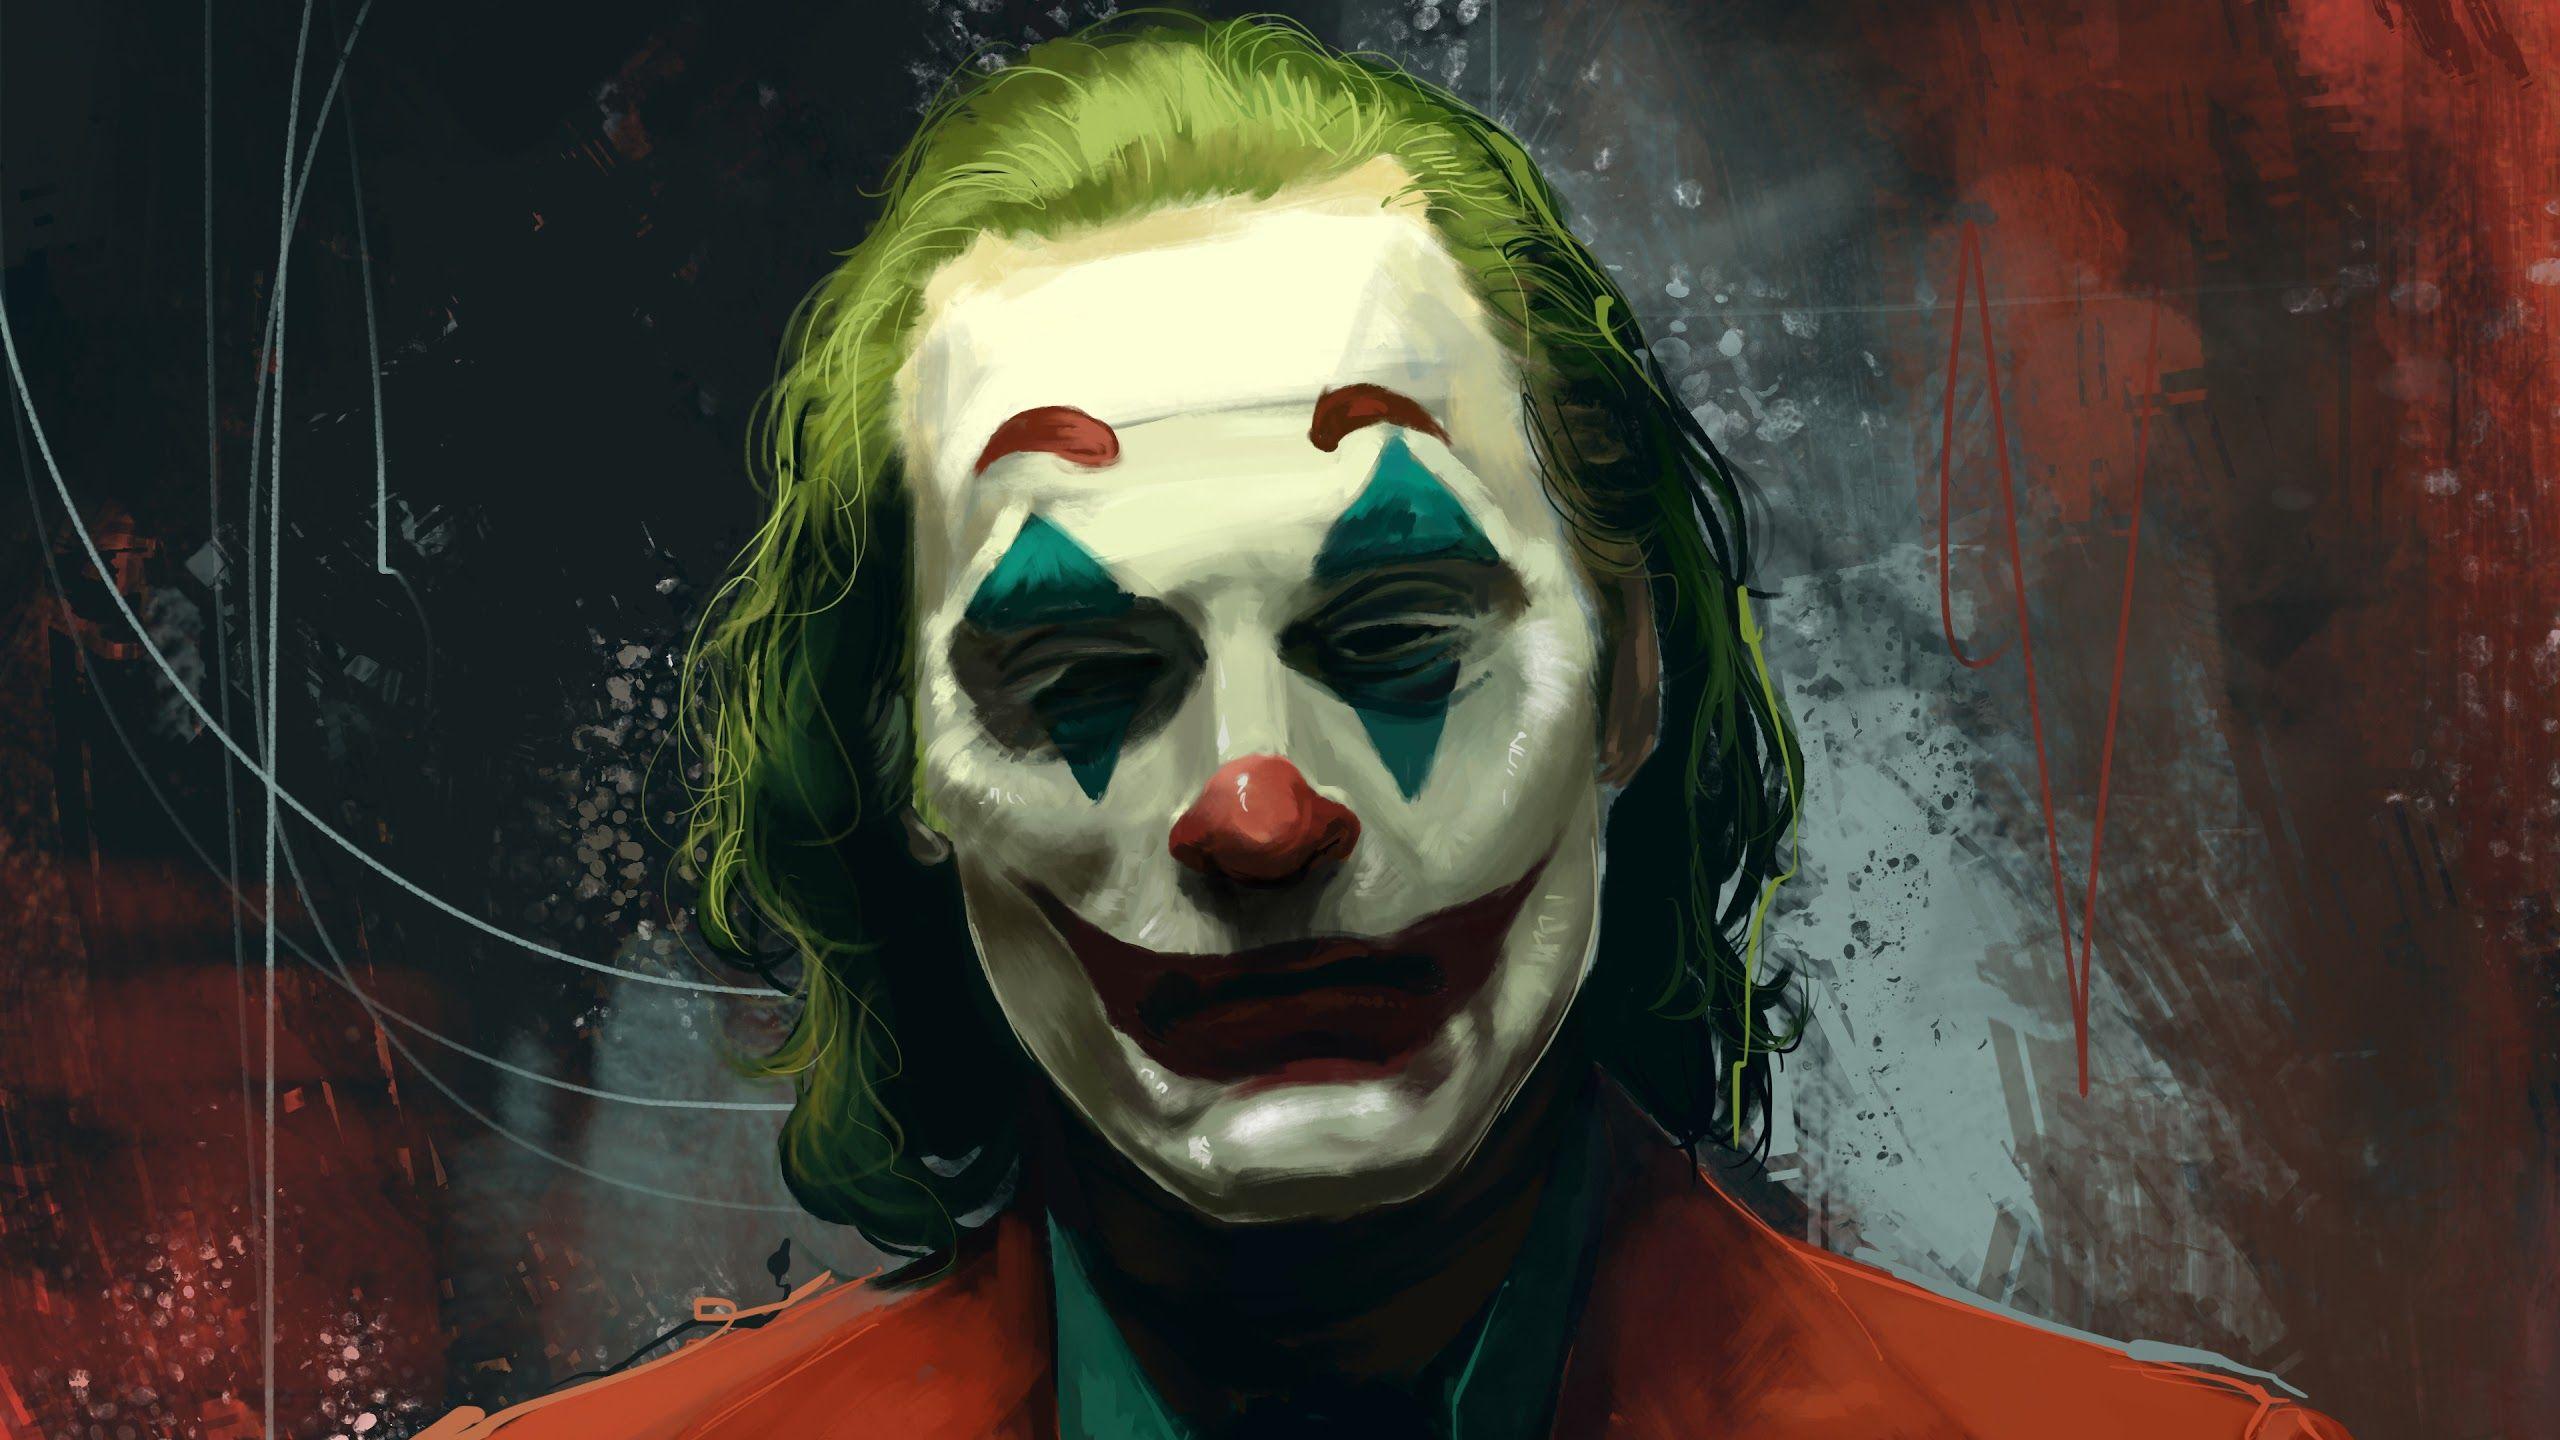 Joker 2019 Computer Wallpapers - Top Free Joker 2019 Computer Backgrounds ...2560 x 1440